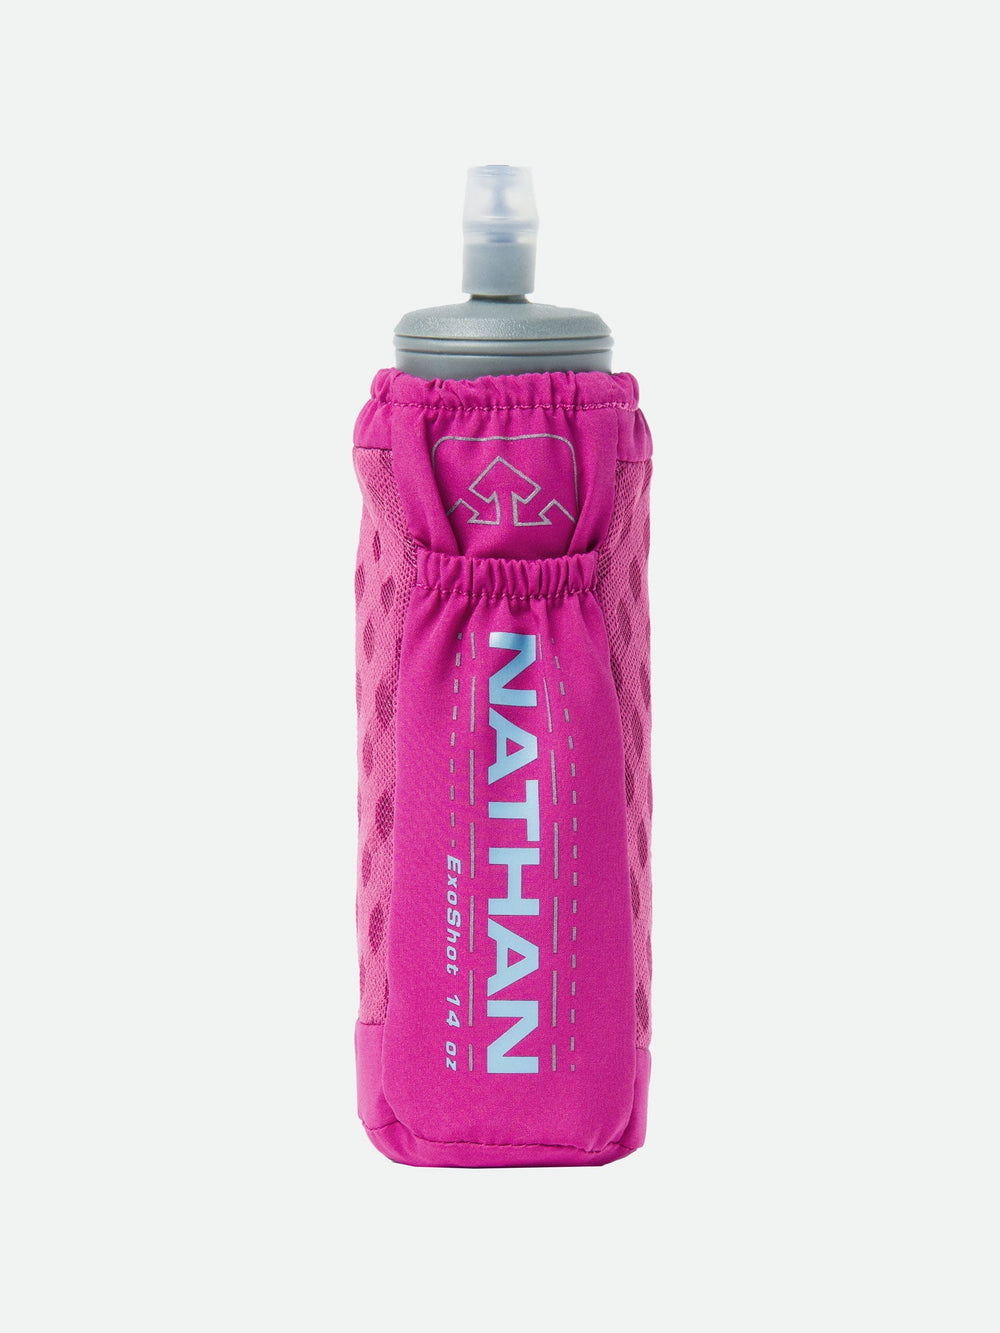  Nathan SpeedDraw Plus Insulated Flask, Handheld